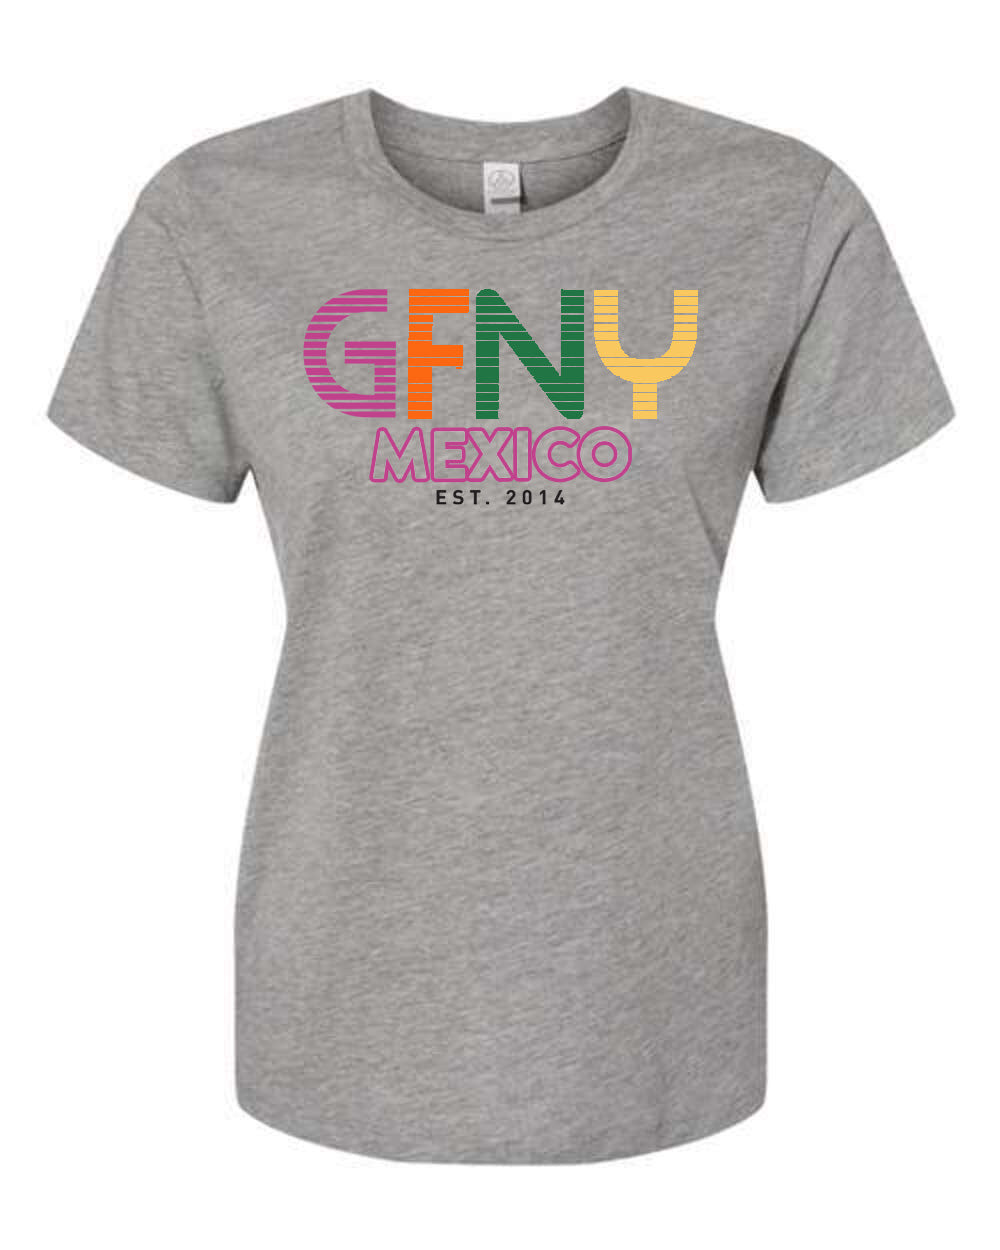 Woman Grey T-shirt GFNY Mexico Est.